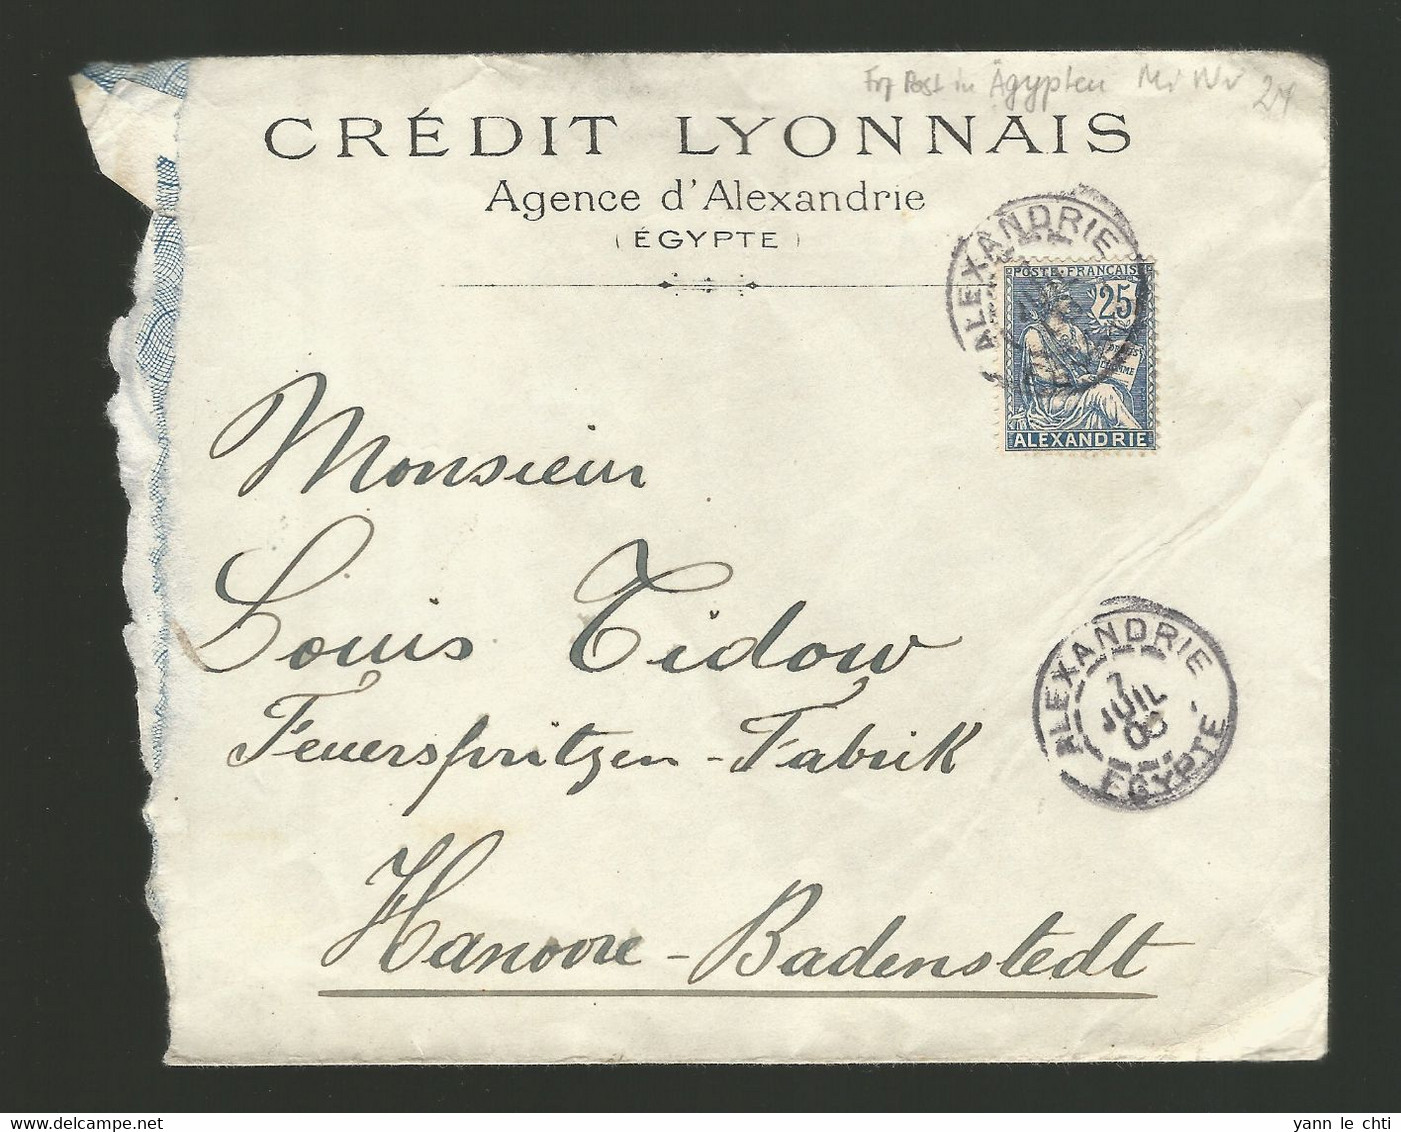 Brief Enveloppe Bank Banque Credit Lyonnais Alexandrie Egypte 1906 Pour Hannover Badenstedt Feuerspritzen Fabrik - Briefe U. Dokumente